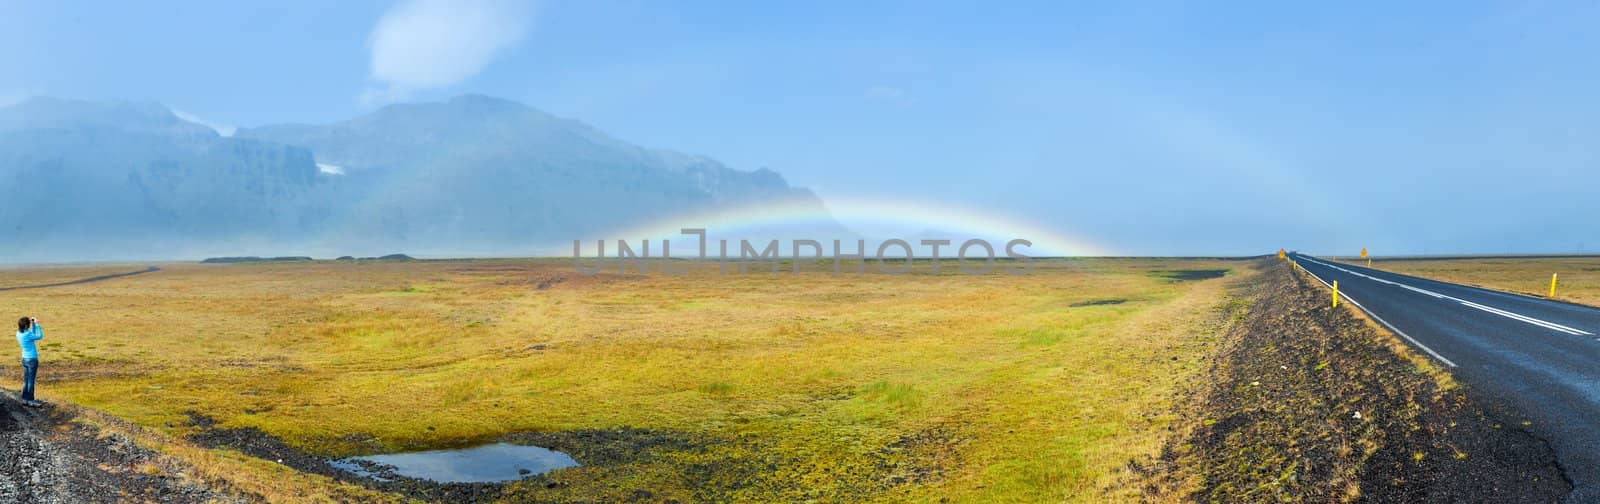 Iceland - rainbow over Ring Road by maxoliki